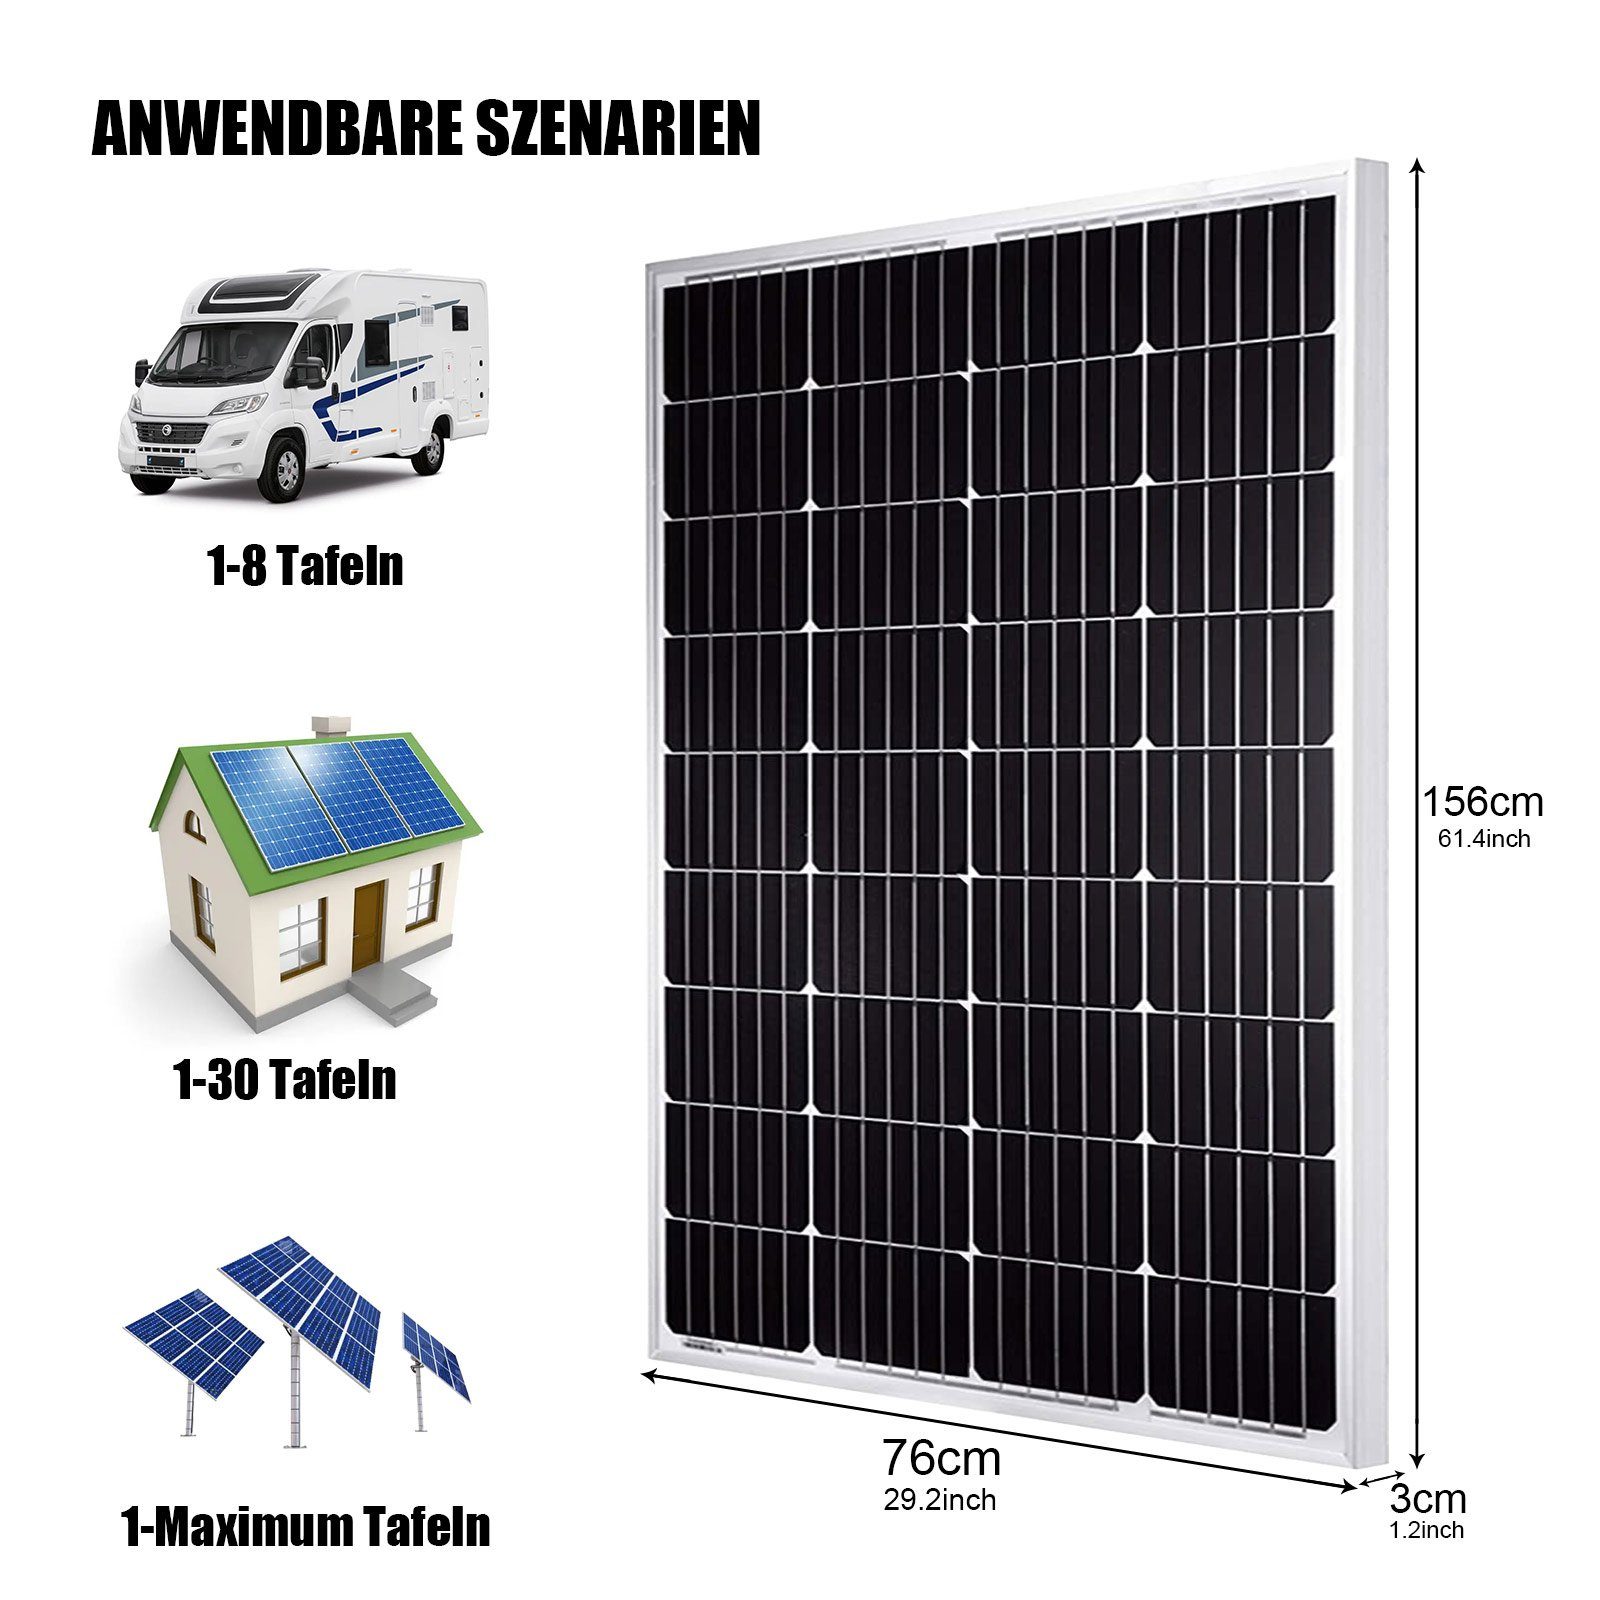 GLIESE Solaranlage 300W 12V Solarmodul), Solarmodul erweiterbar (Set, W, 300,00 Module, 300W Monokristallin, PV